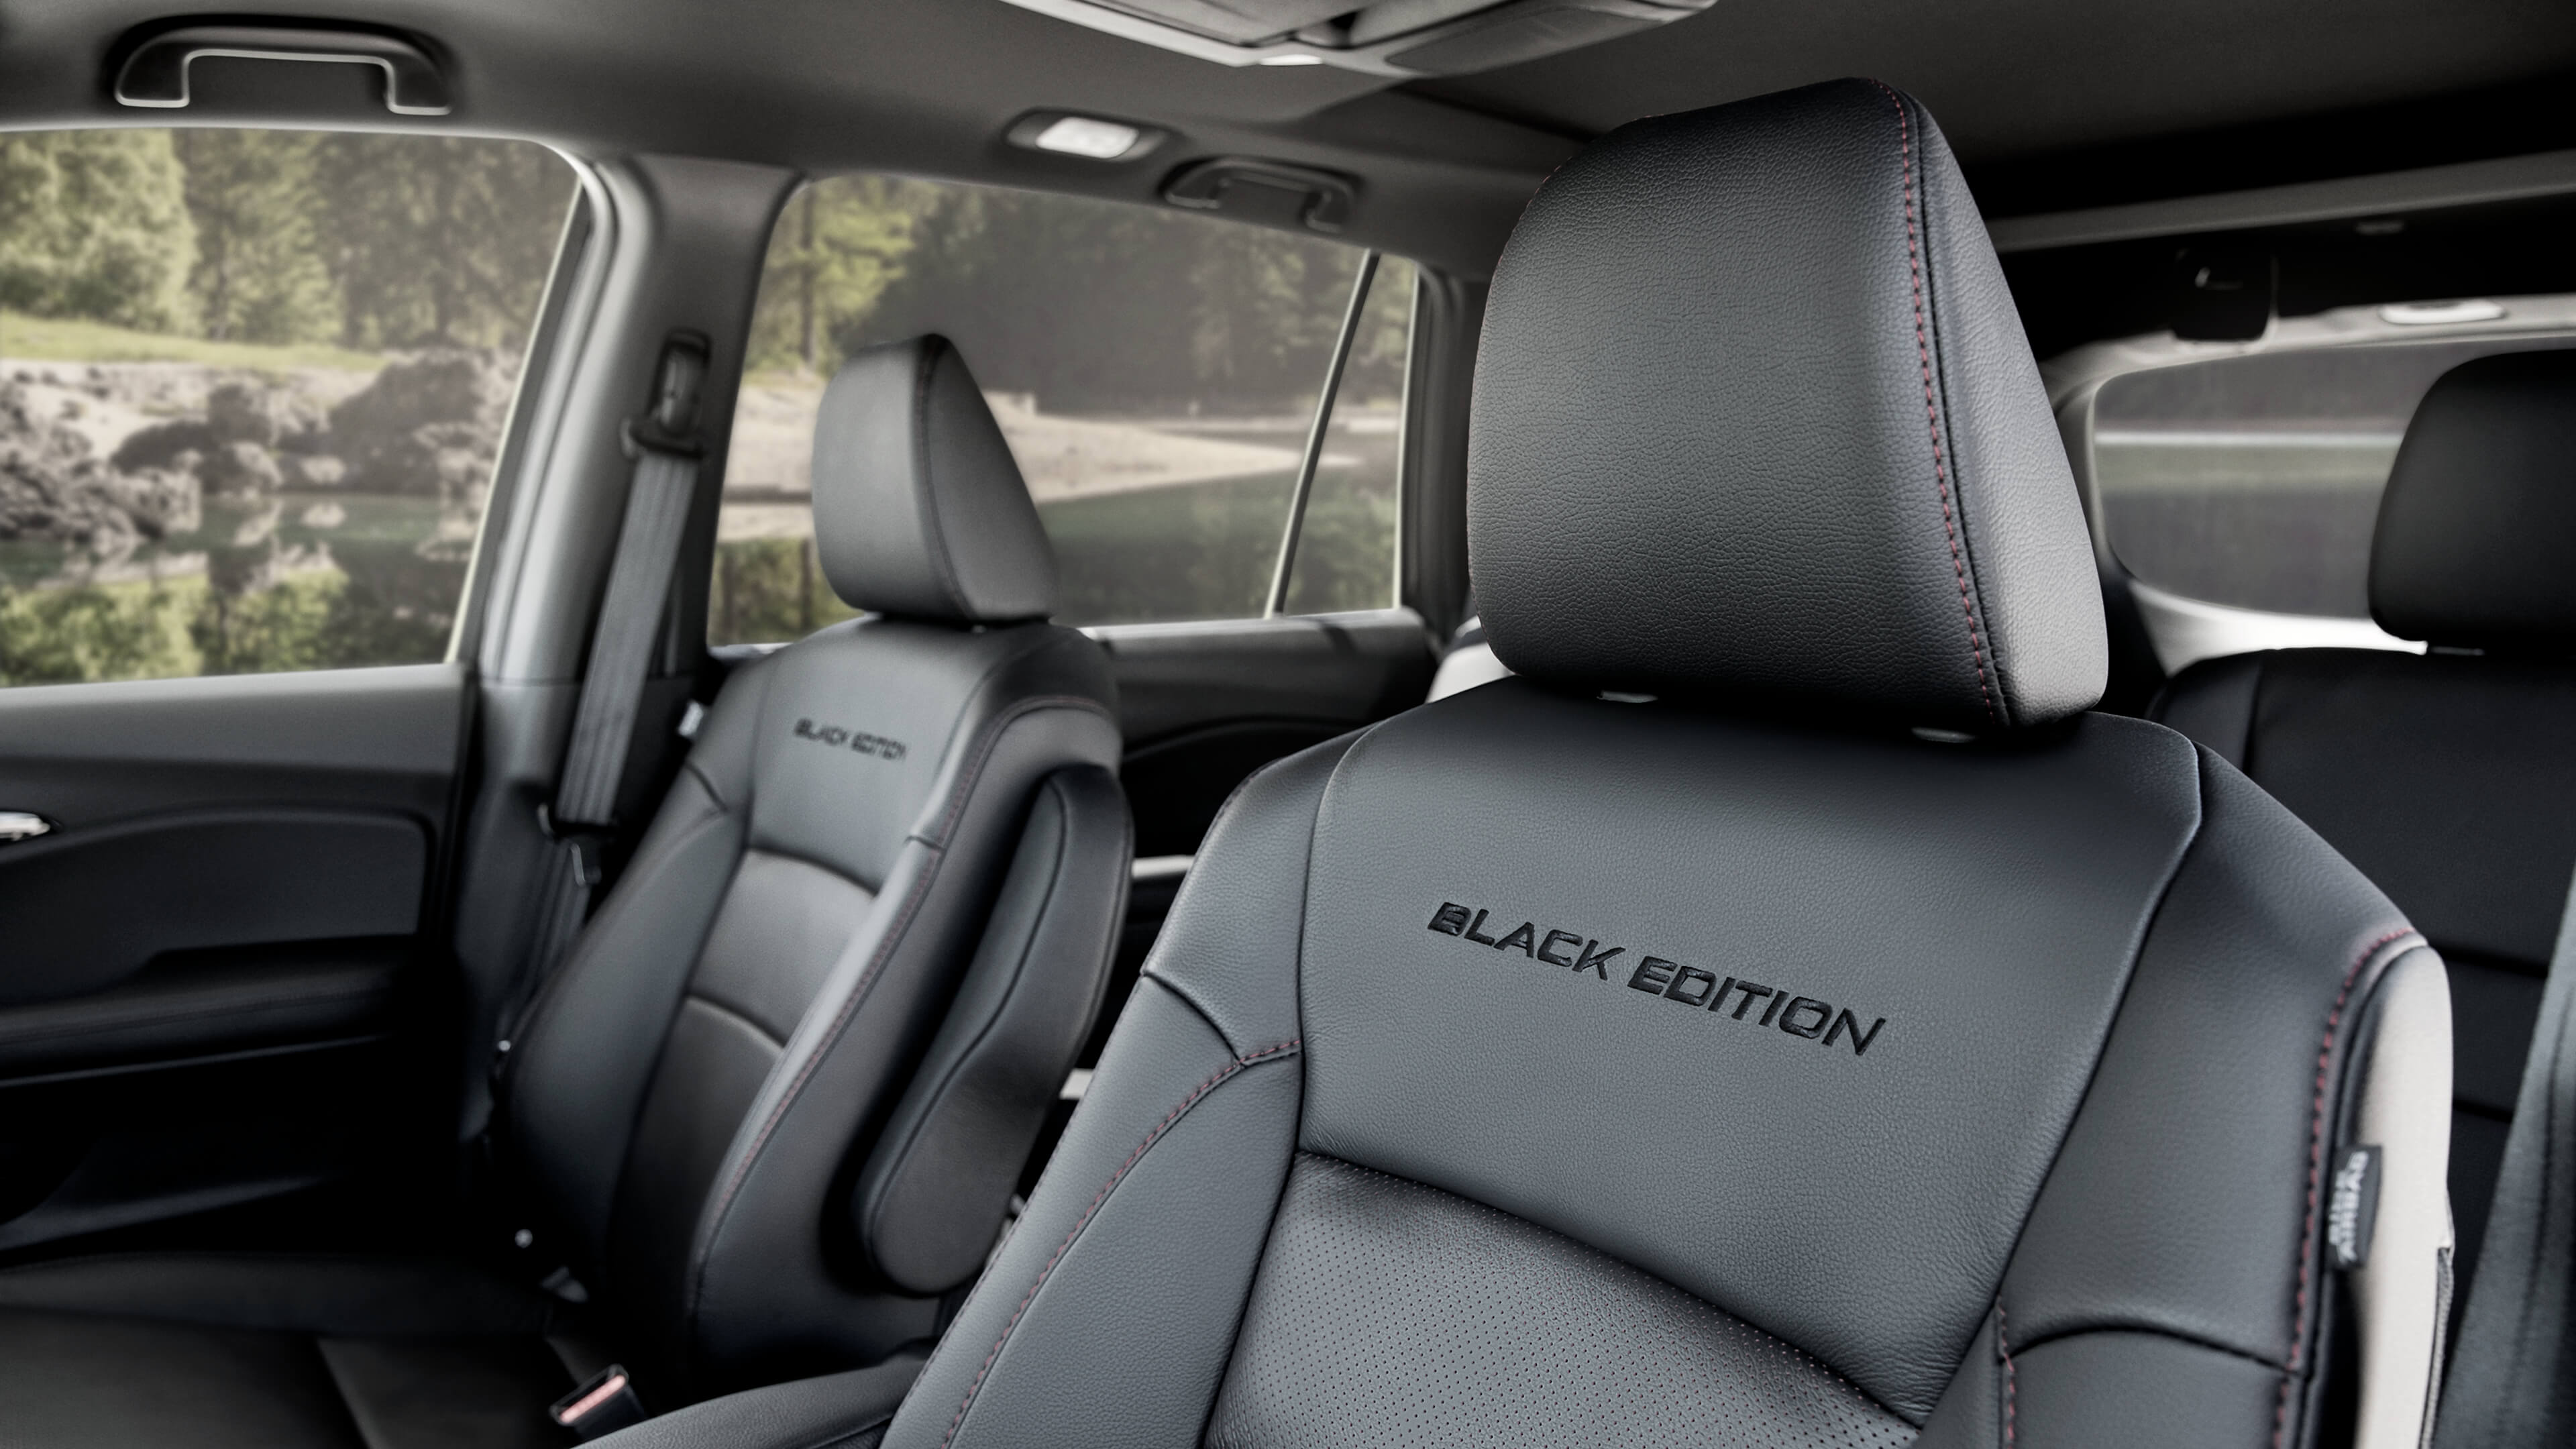 2020 Honda Pilot Black Edition leather seat